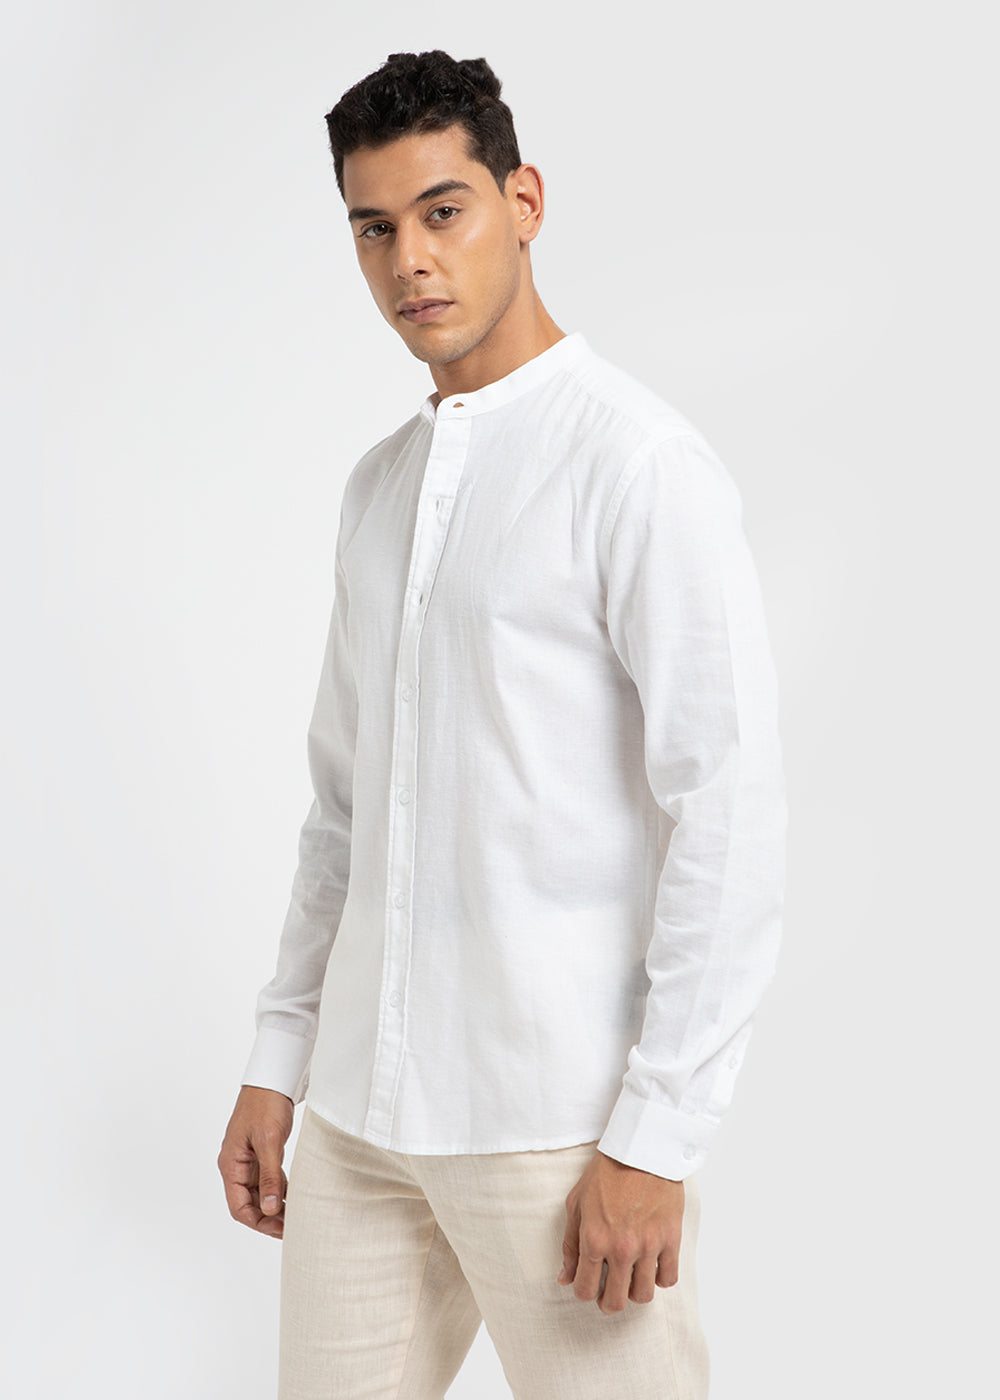 Ivory White Cotton Linen Shirt